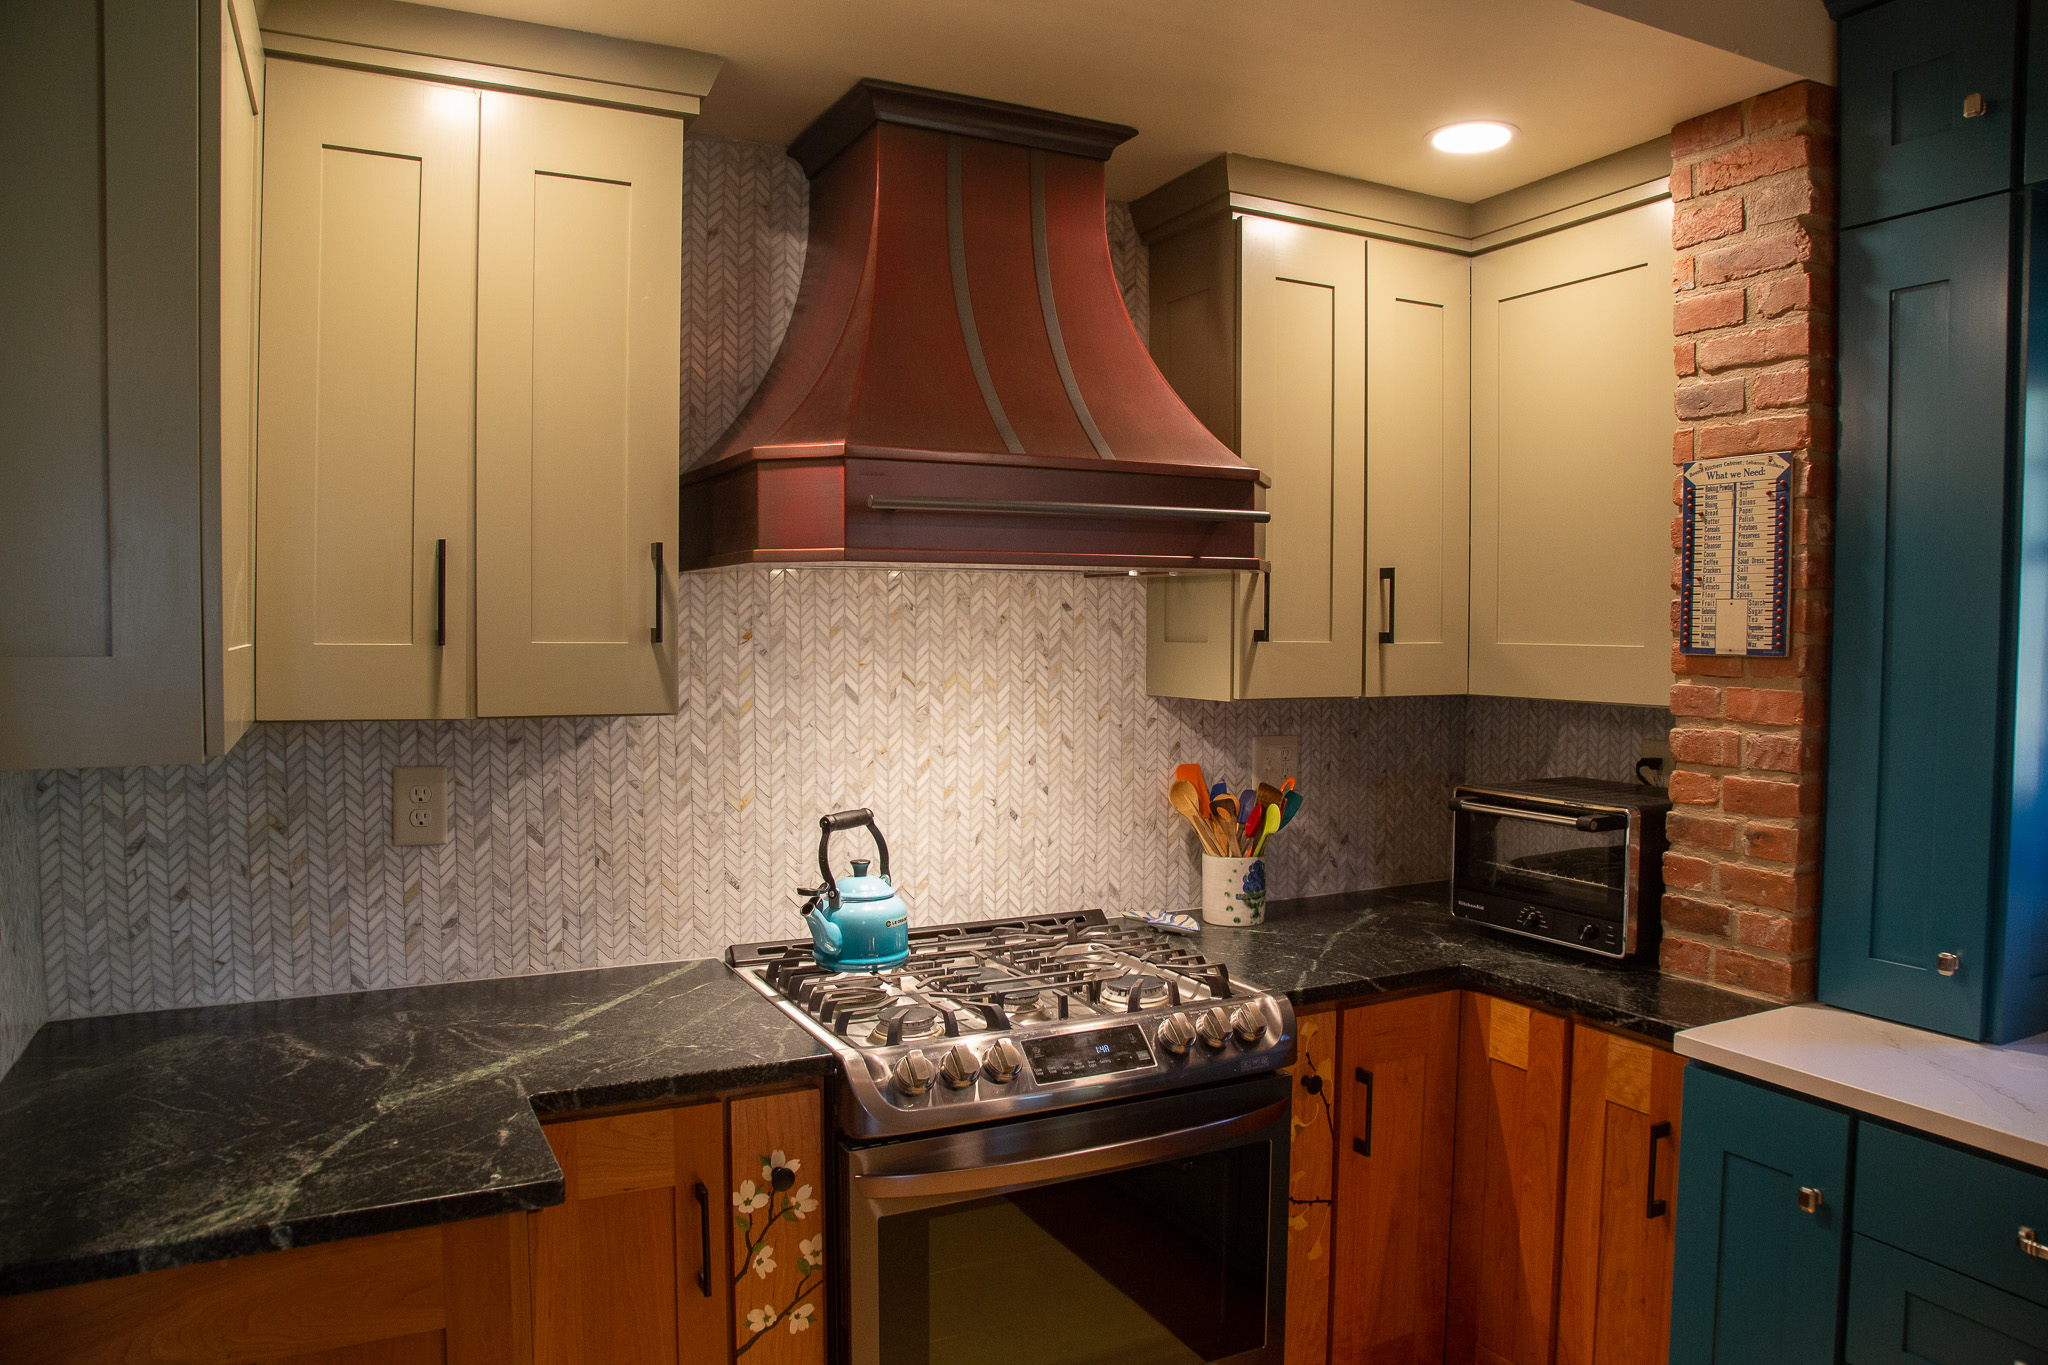 Stunning kitchen with rustic-inspired wood cabinets, sleek white countertops timeless white tile backsplash, all enhanced by a stylish range hood design